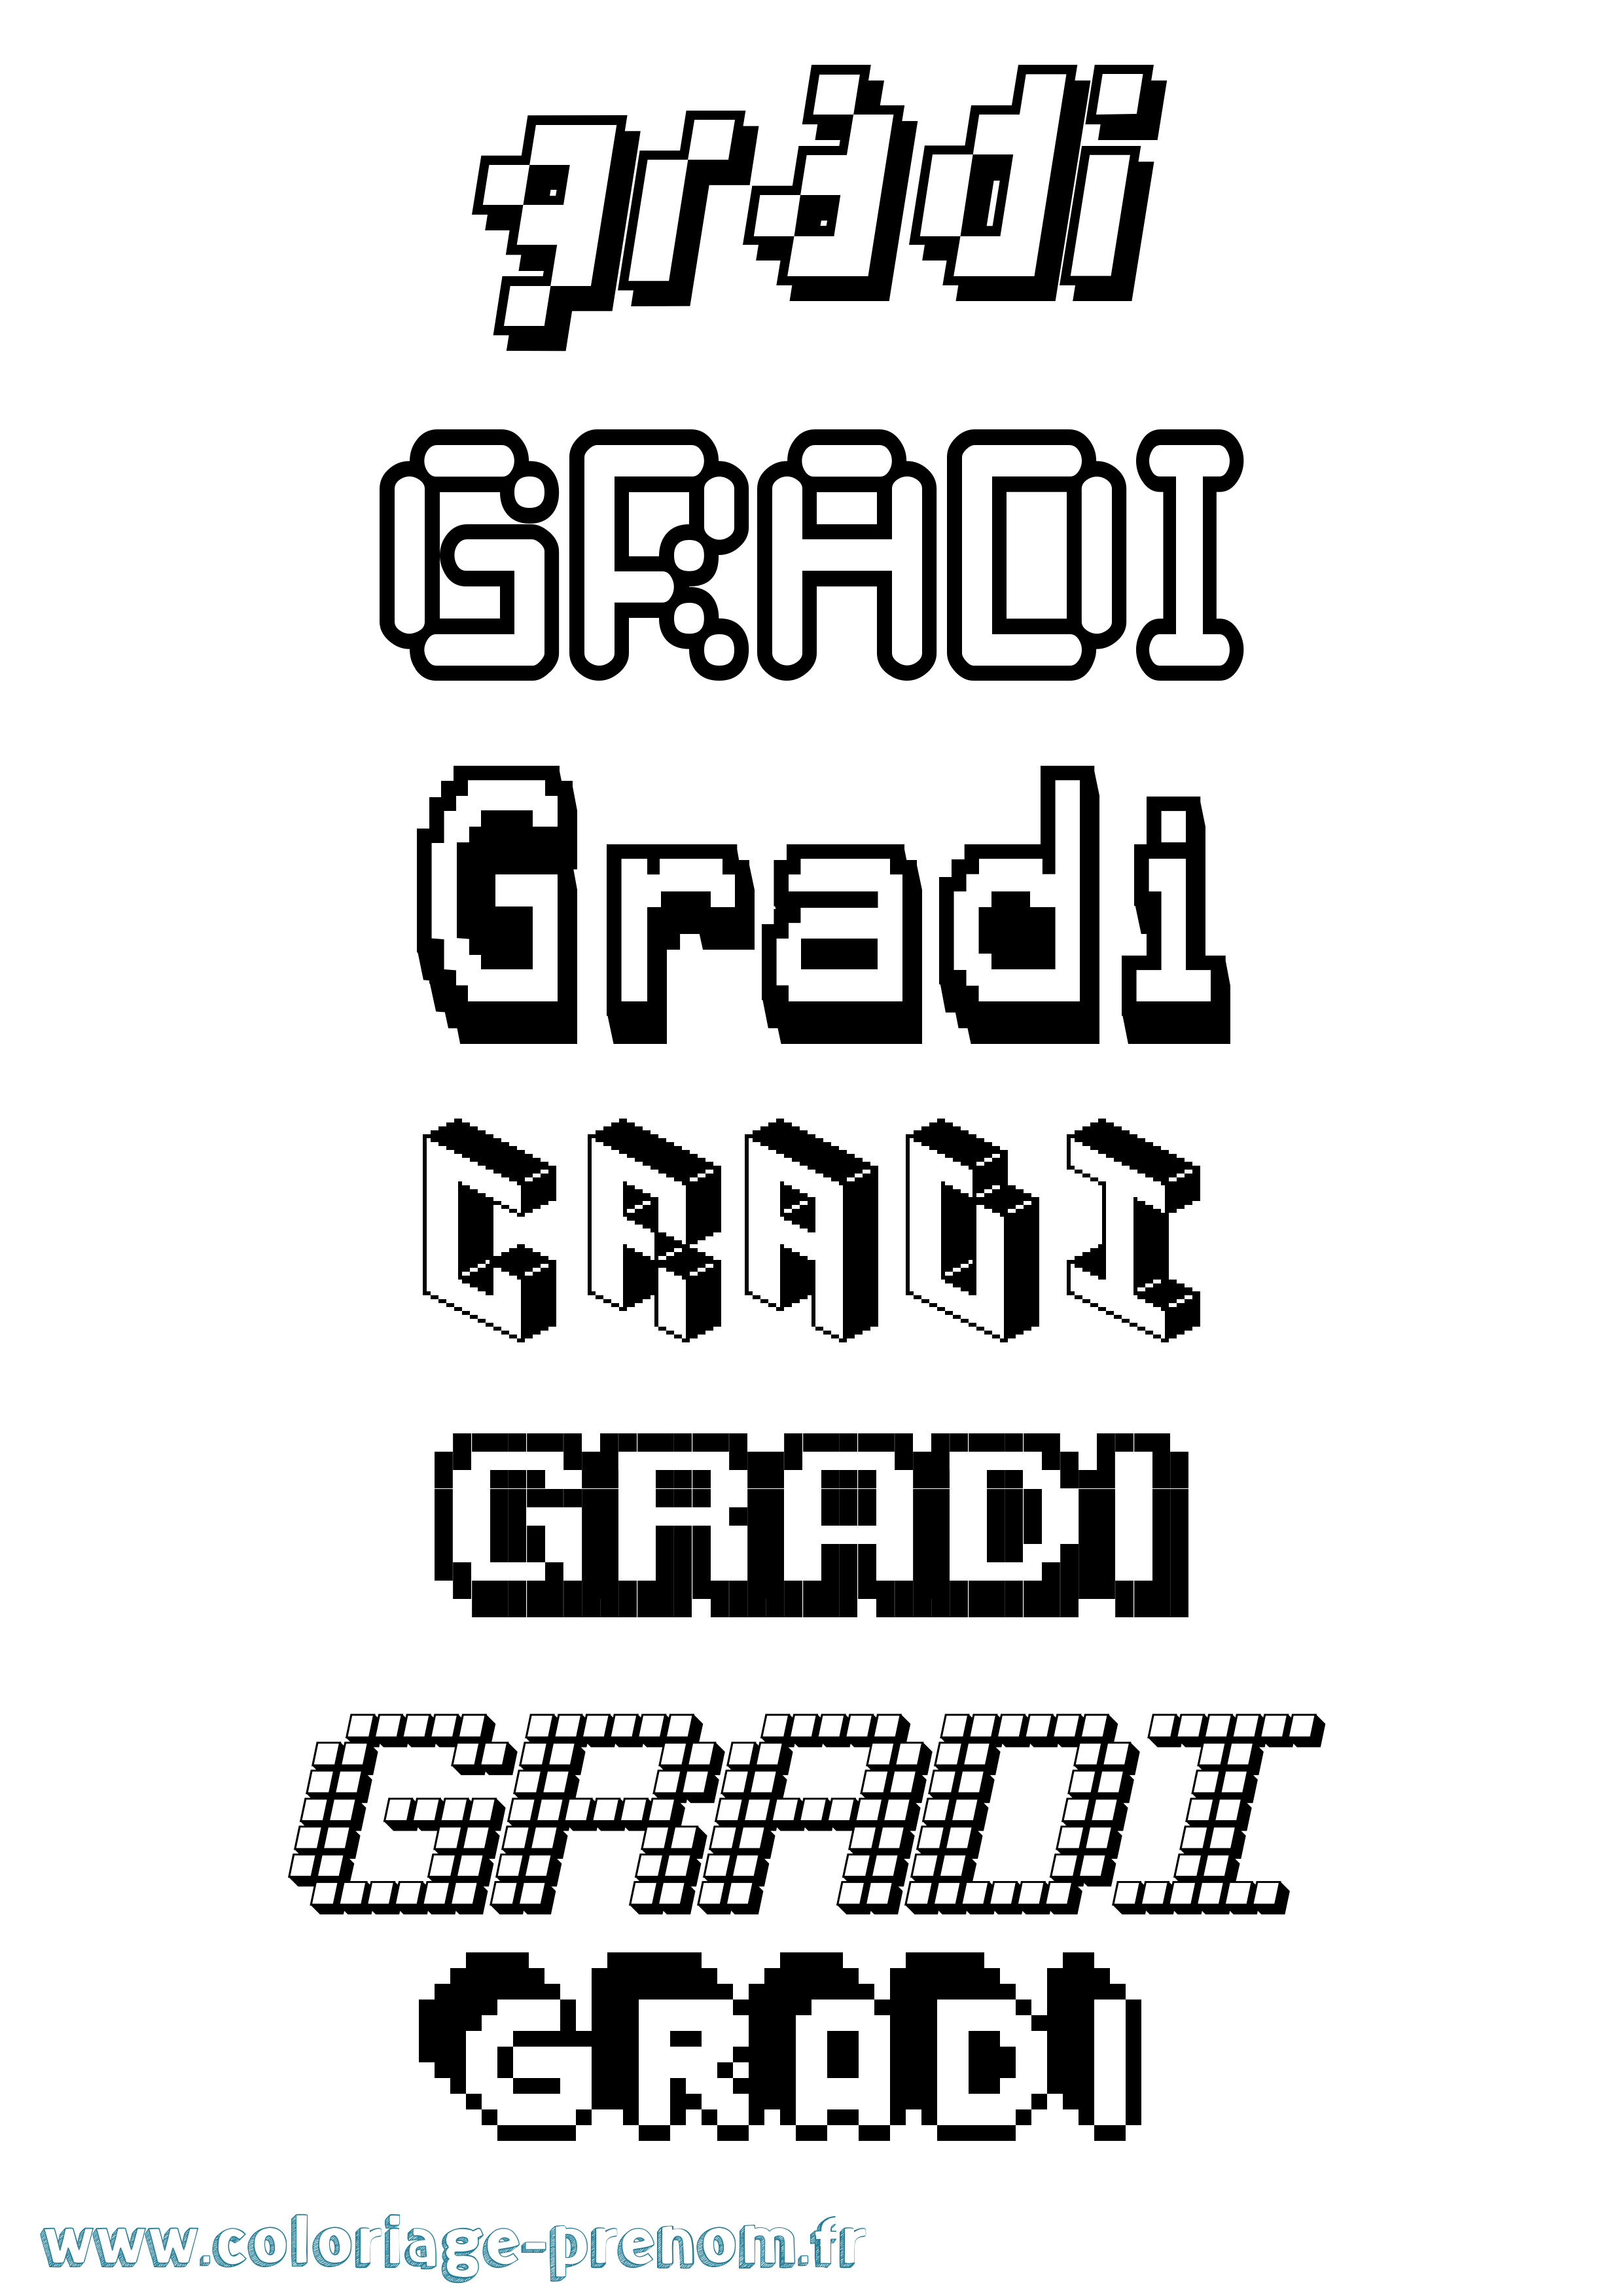 Coloriage prénom Gradi Pixel